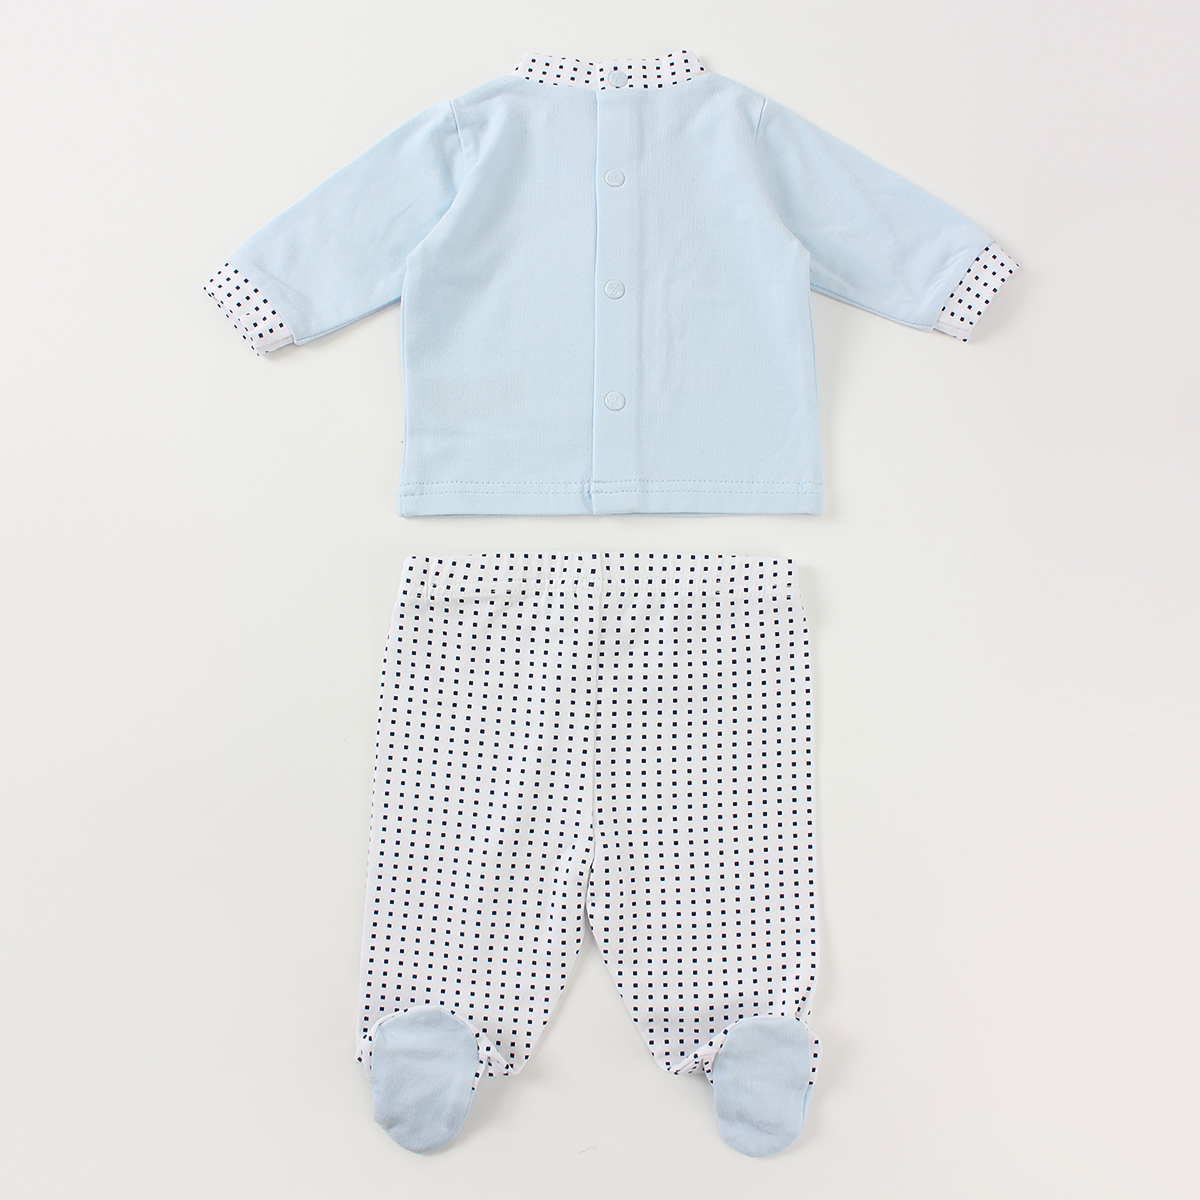 CO 4883 New Design Unisex Baby Clothes Set